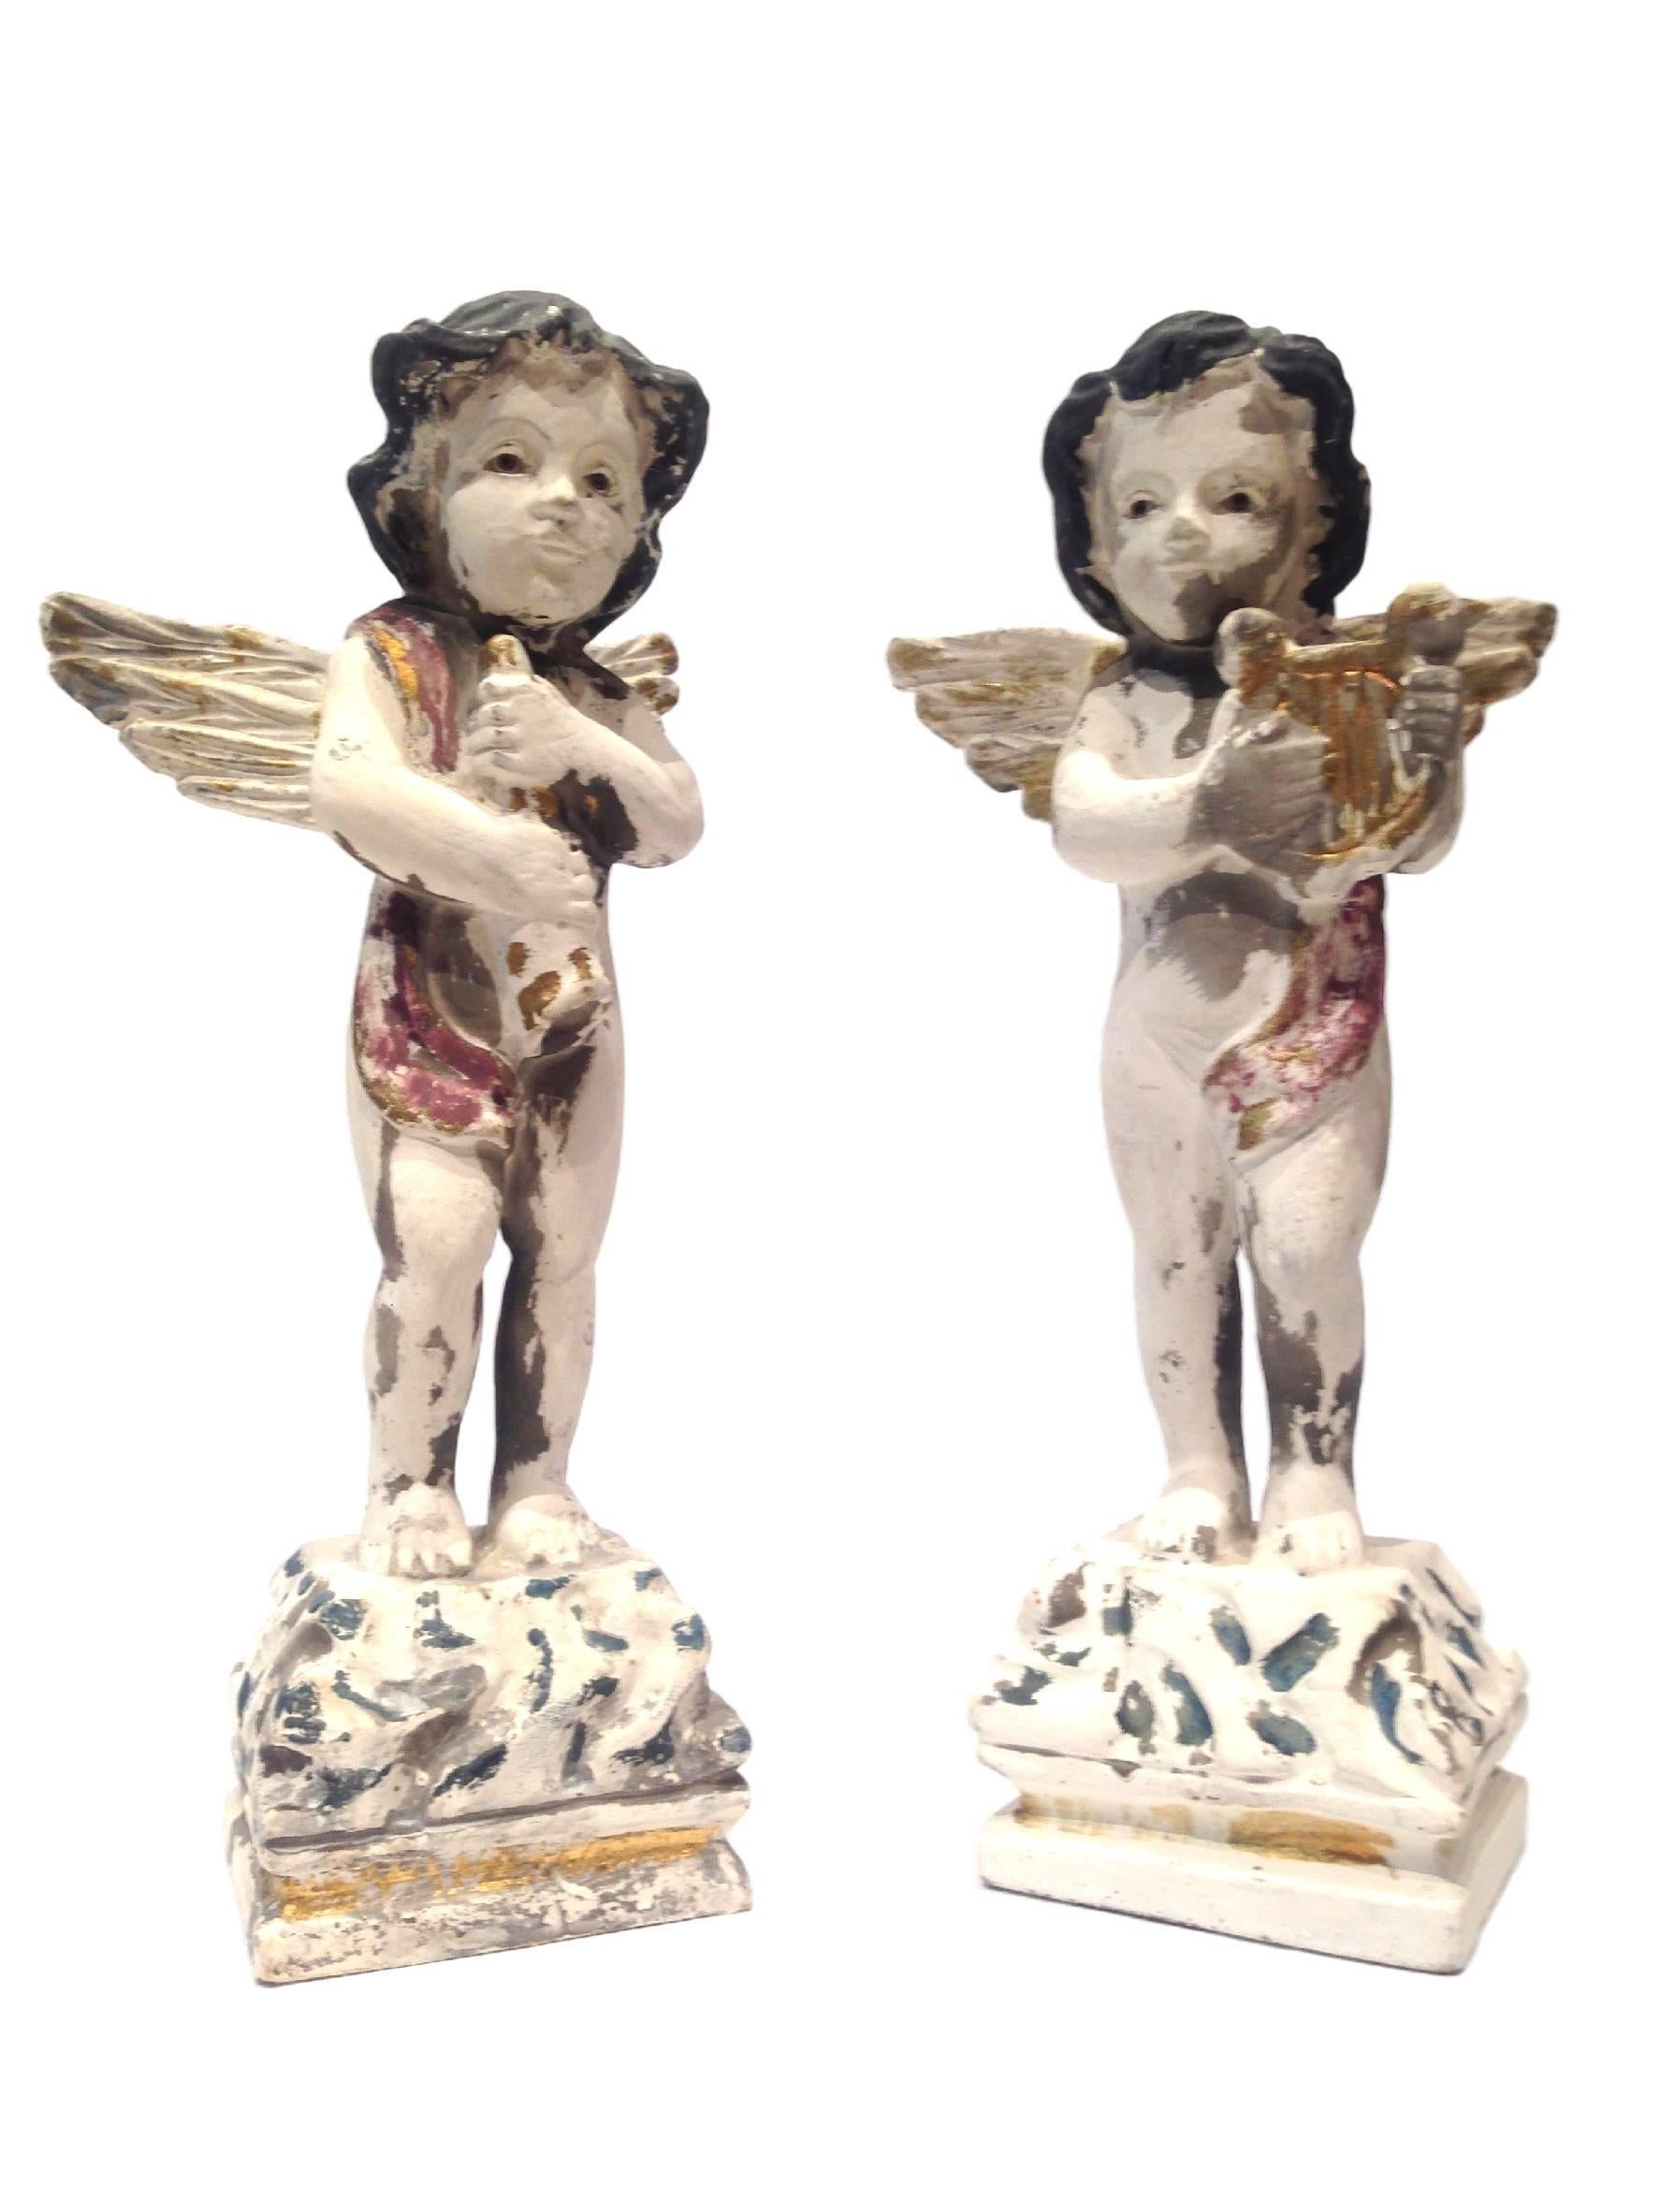 Beautiful pair of hand-painted musical cherub statues.
Measures: 10